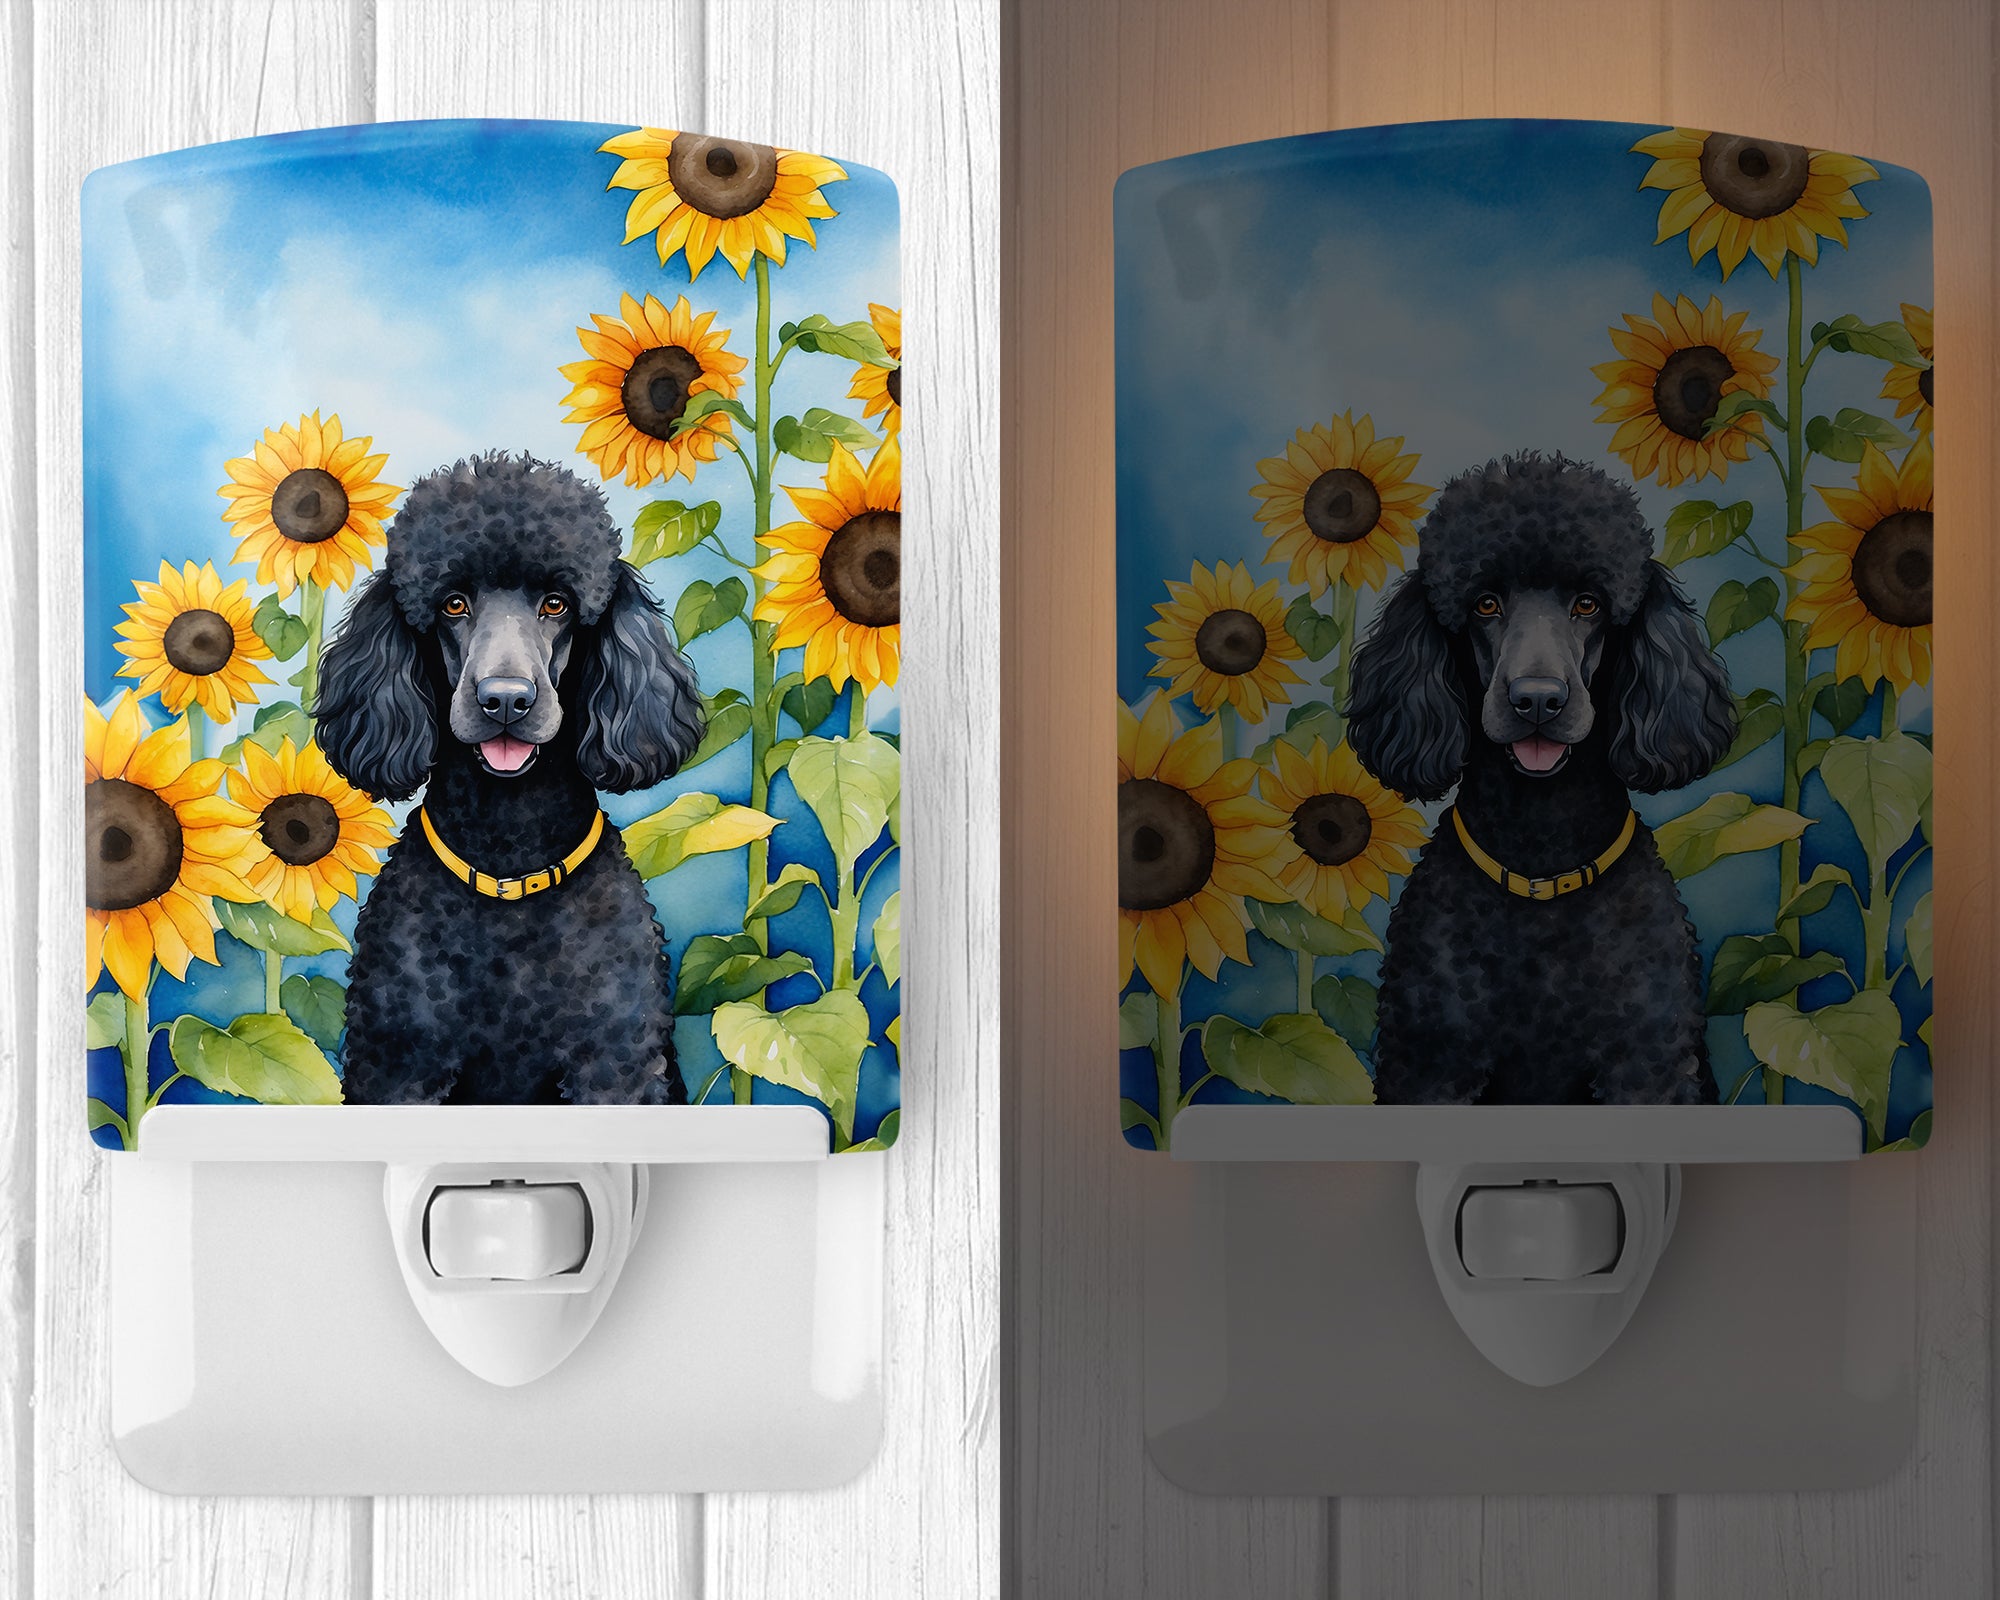 Black Poodle in Sunflowers Ceramic Night Light